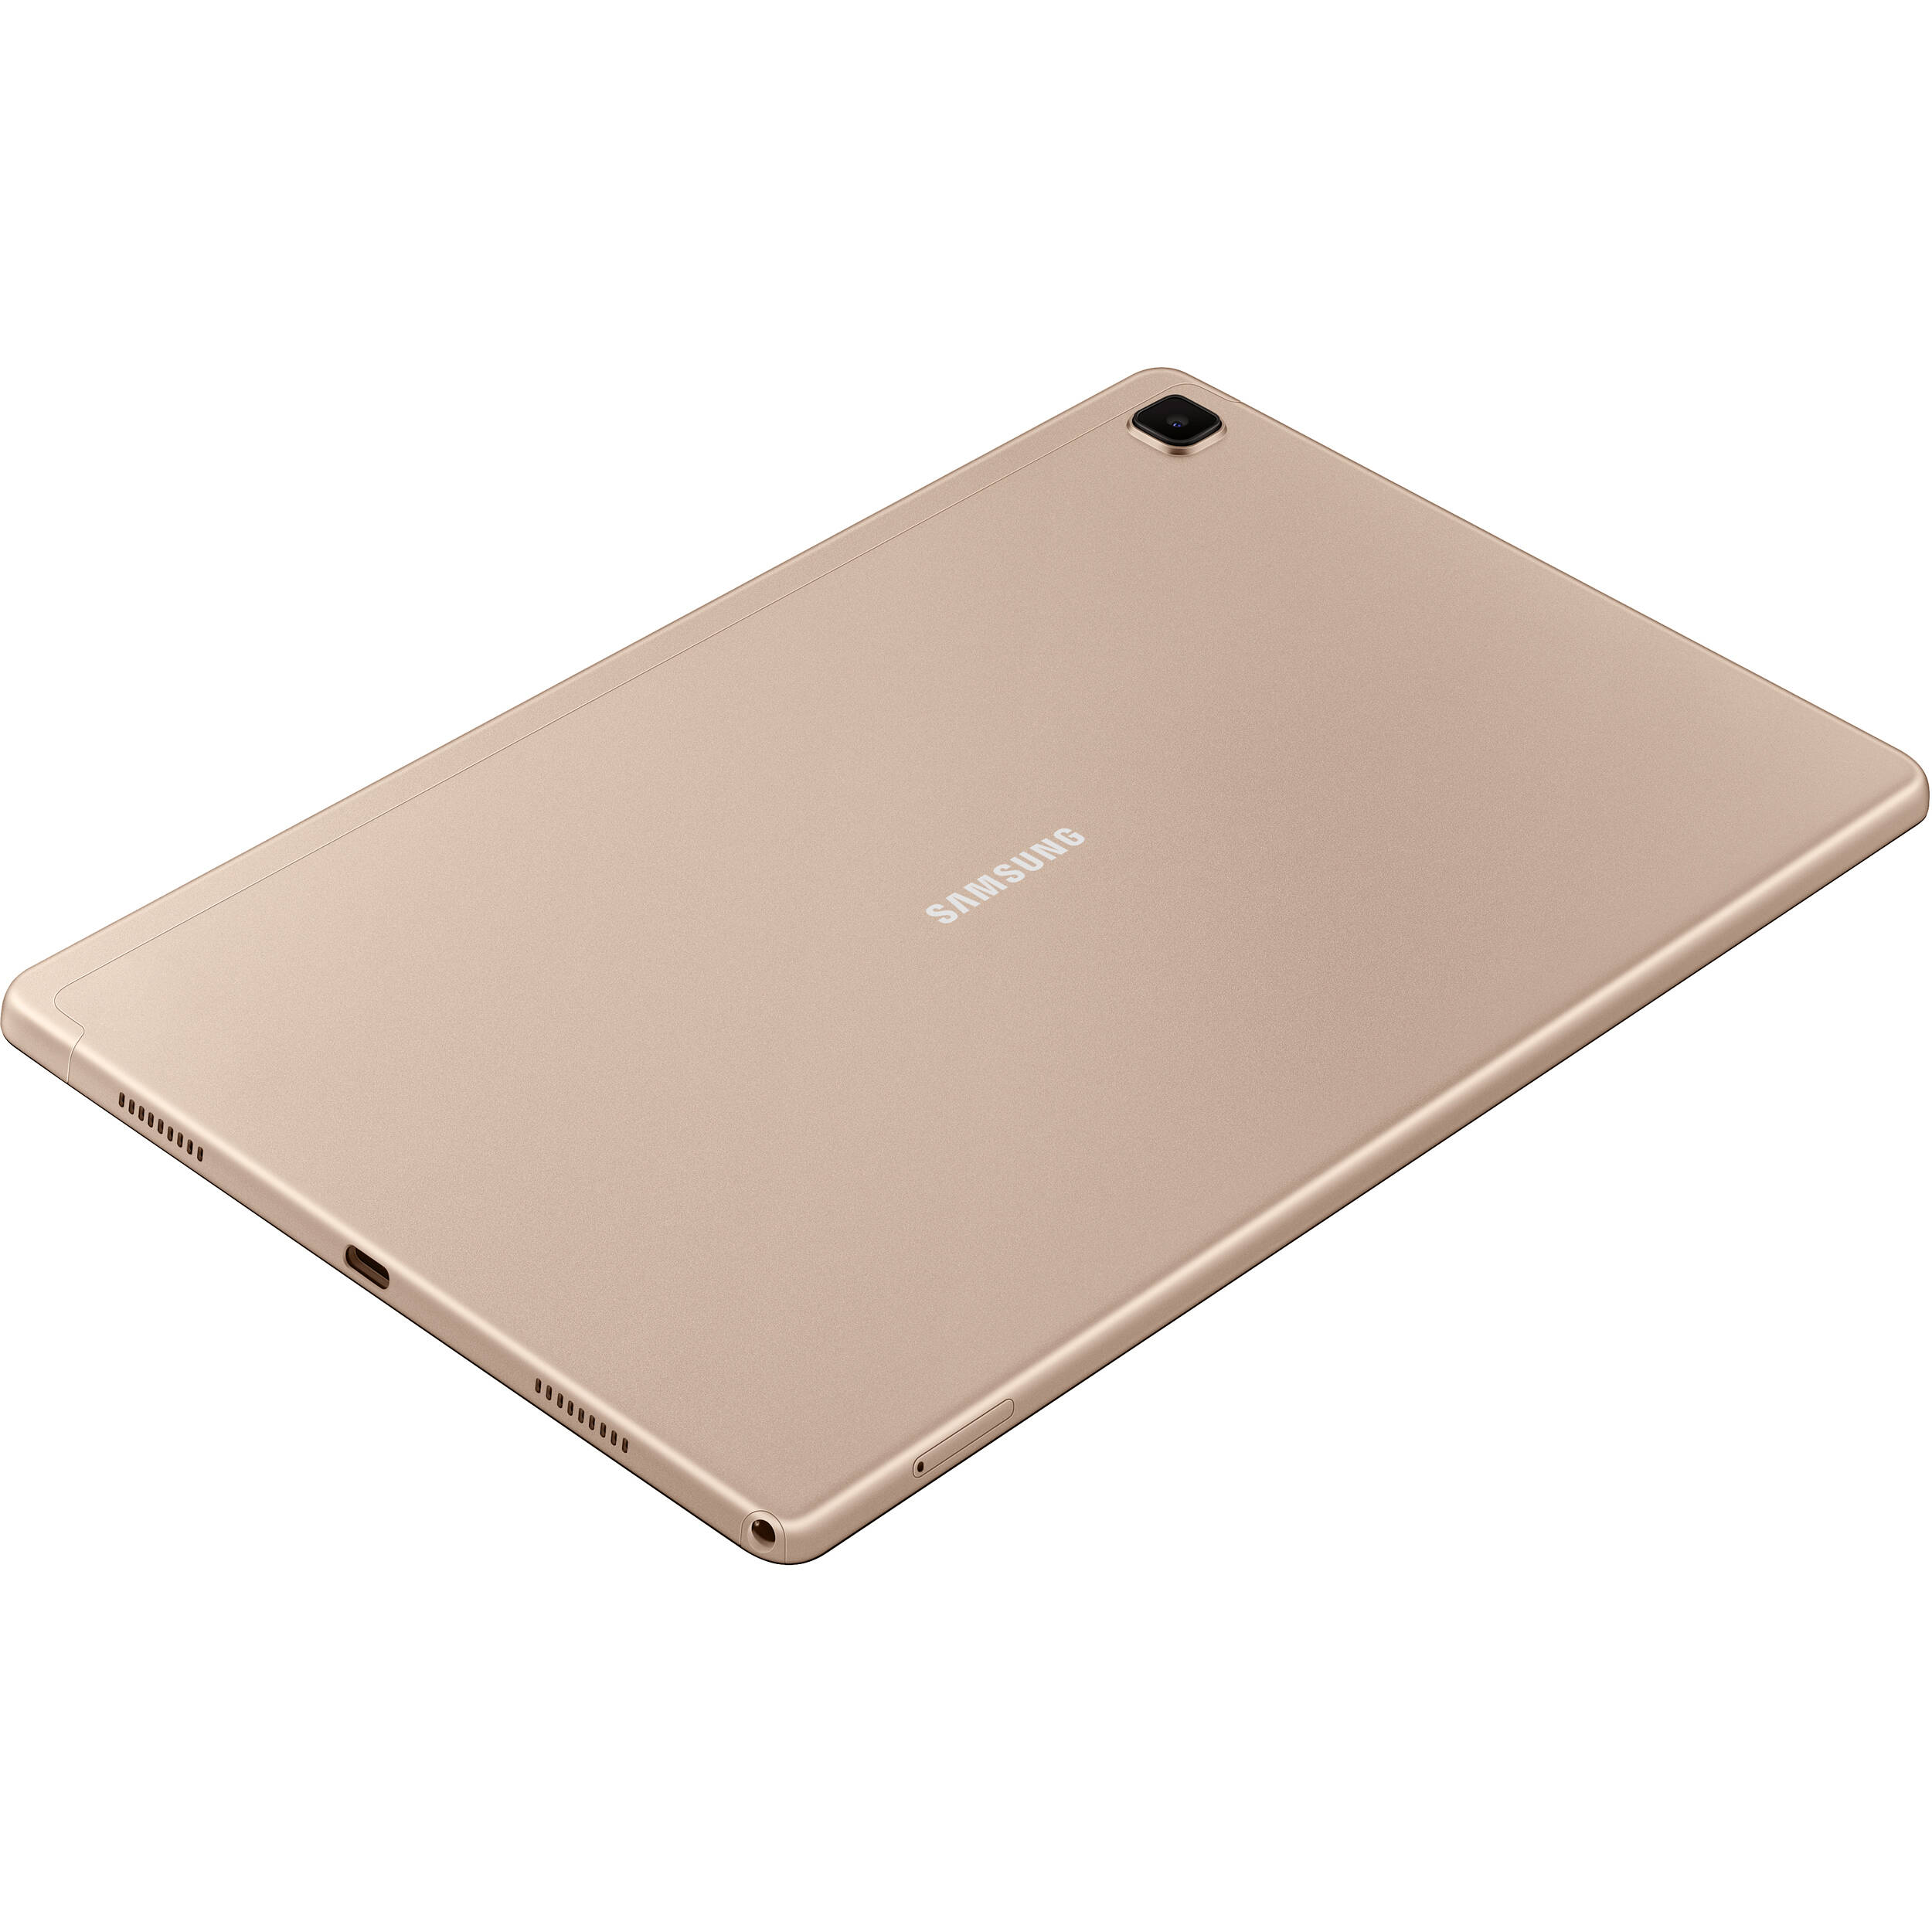 SAMSUNG Galaxy Tab A7 32GB 10.4" Wi-Fi Gold - SM-T500NZDAXAR - image 3 of 4